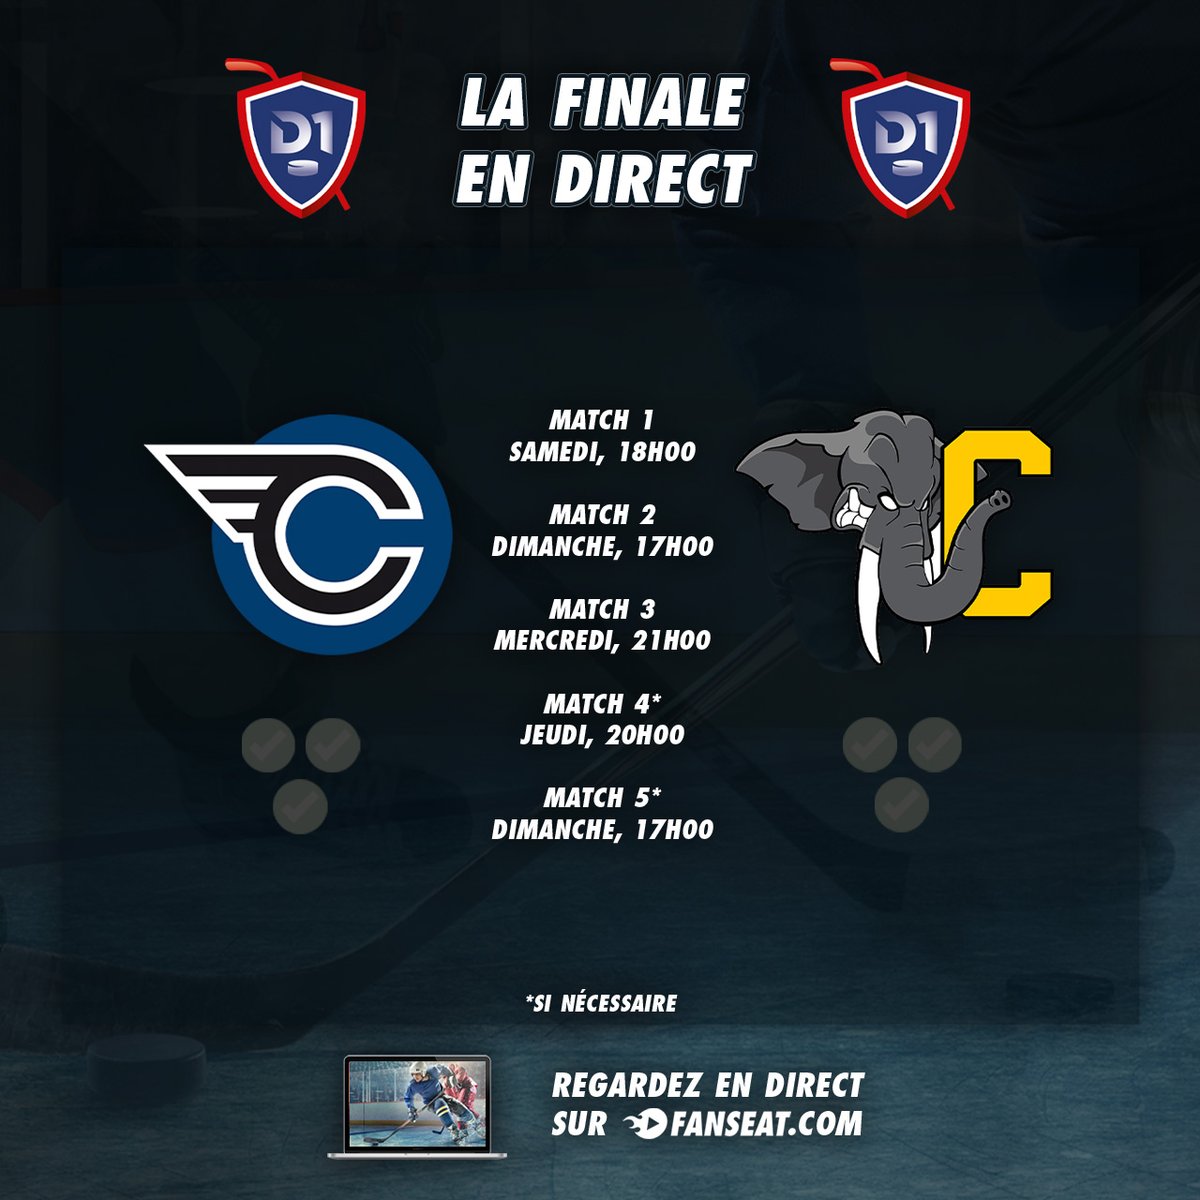 🏒🇫🇷 La finale de la FFHG Division 1 commence demain ! 🏆 Les Corsaires de Nantes vs Les Éléphants de Chambéry... qui va gagner ? #HockeyFrance